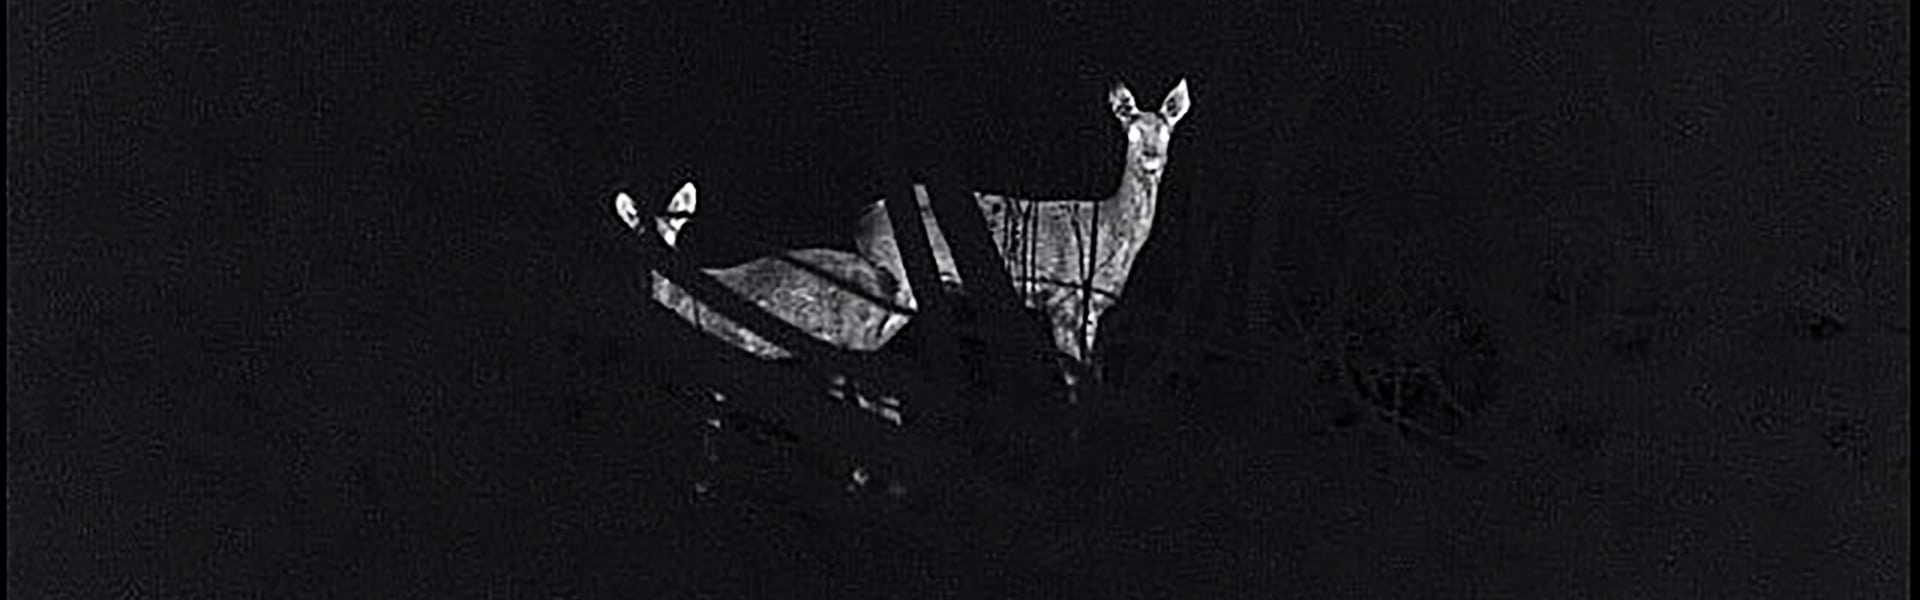 deer through night vision scope